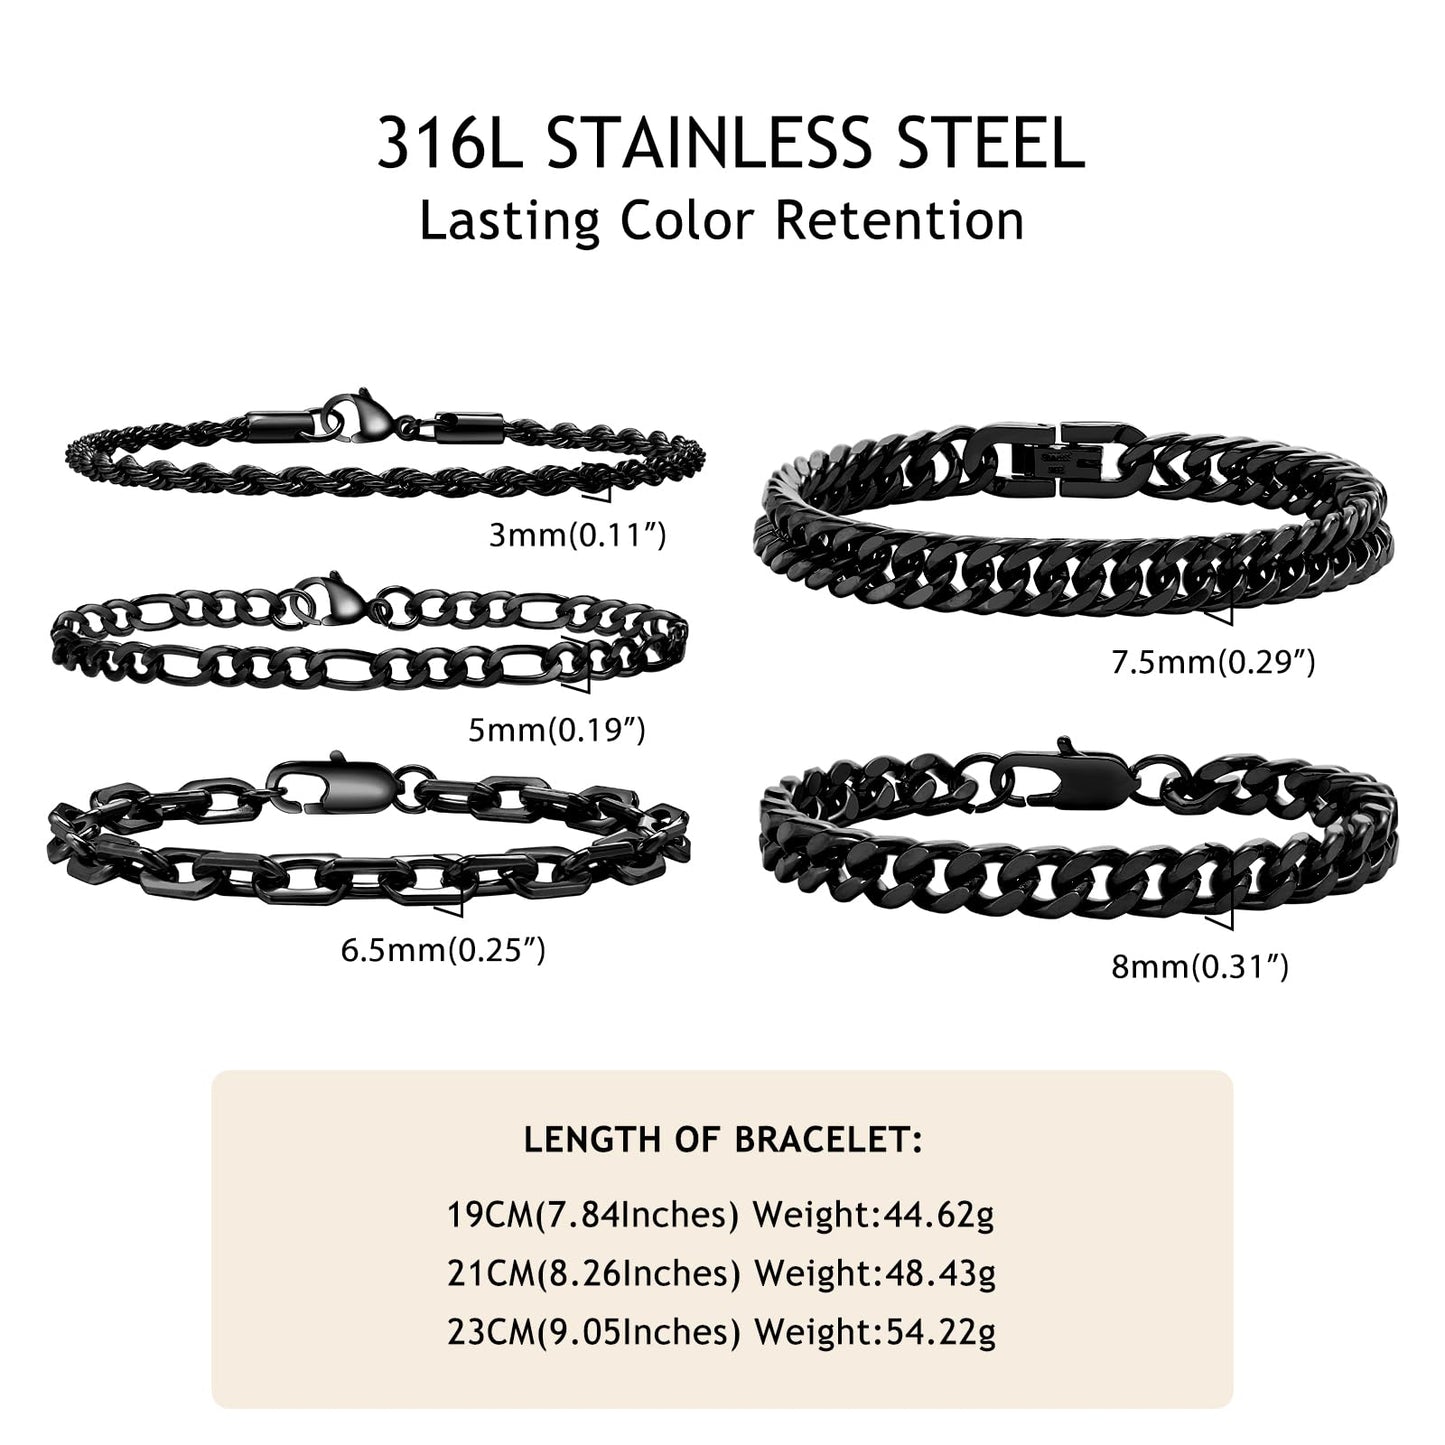 VNOX 5 Pcs Chain Bracelet for Men Women - Sturdy Stainless Steel Curb Width Cuban Link Chain Bracelet Set for Men Women,6.5/7/7.4/8.2/9 Inches